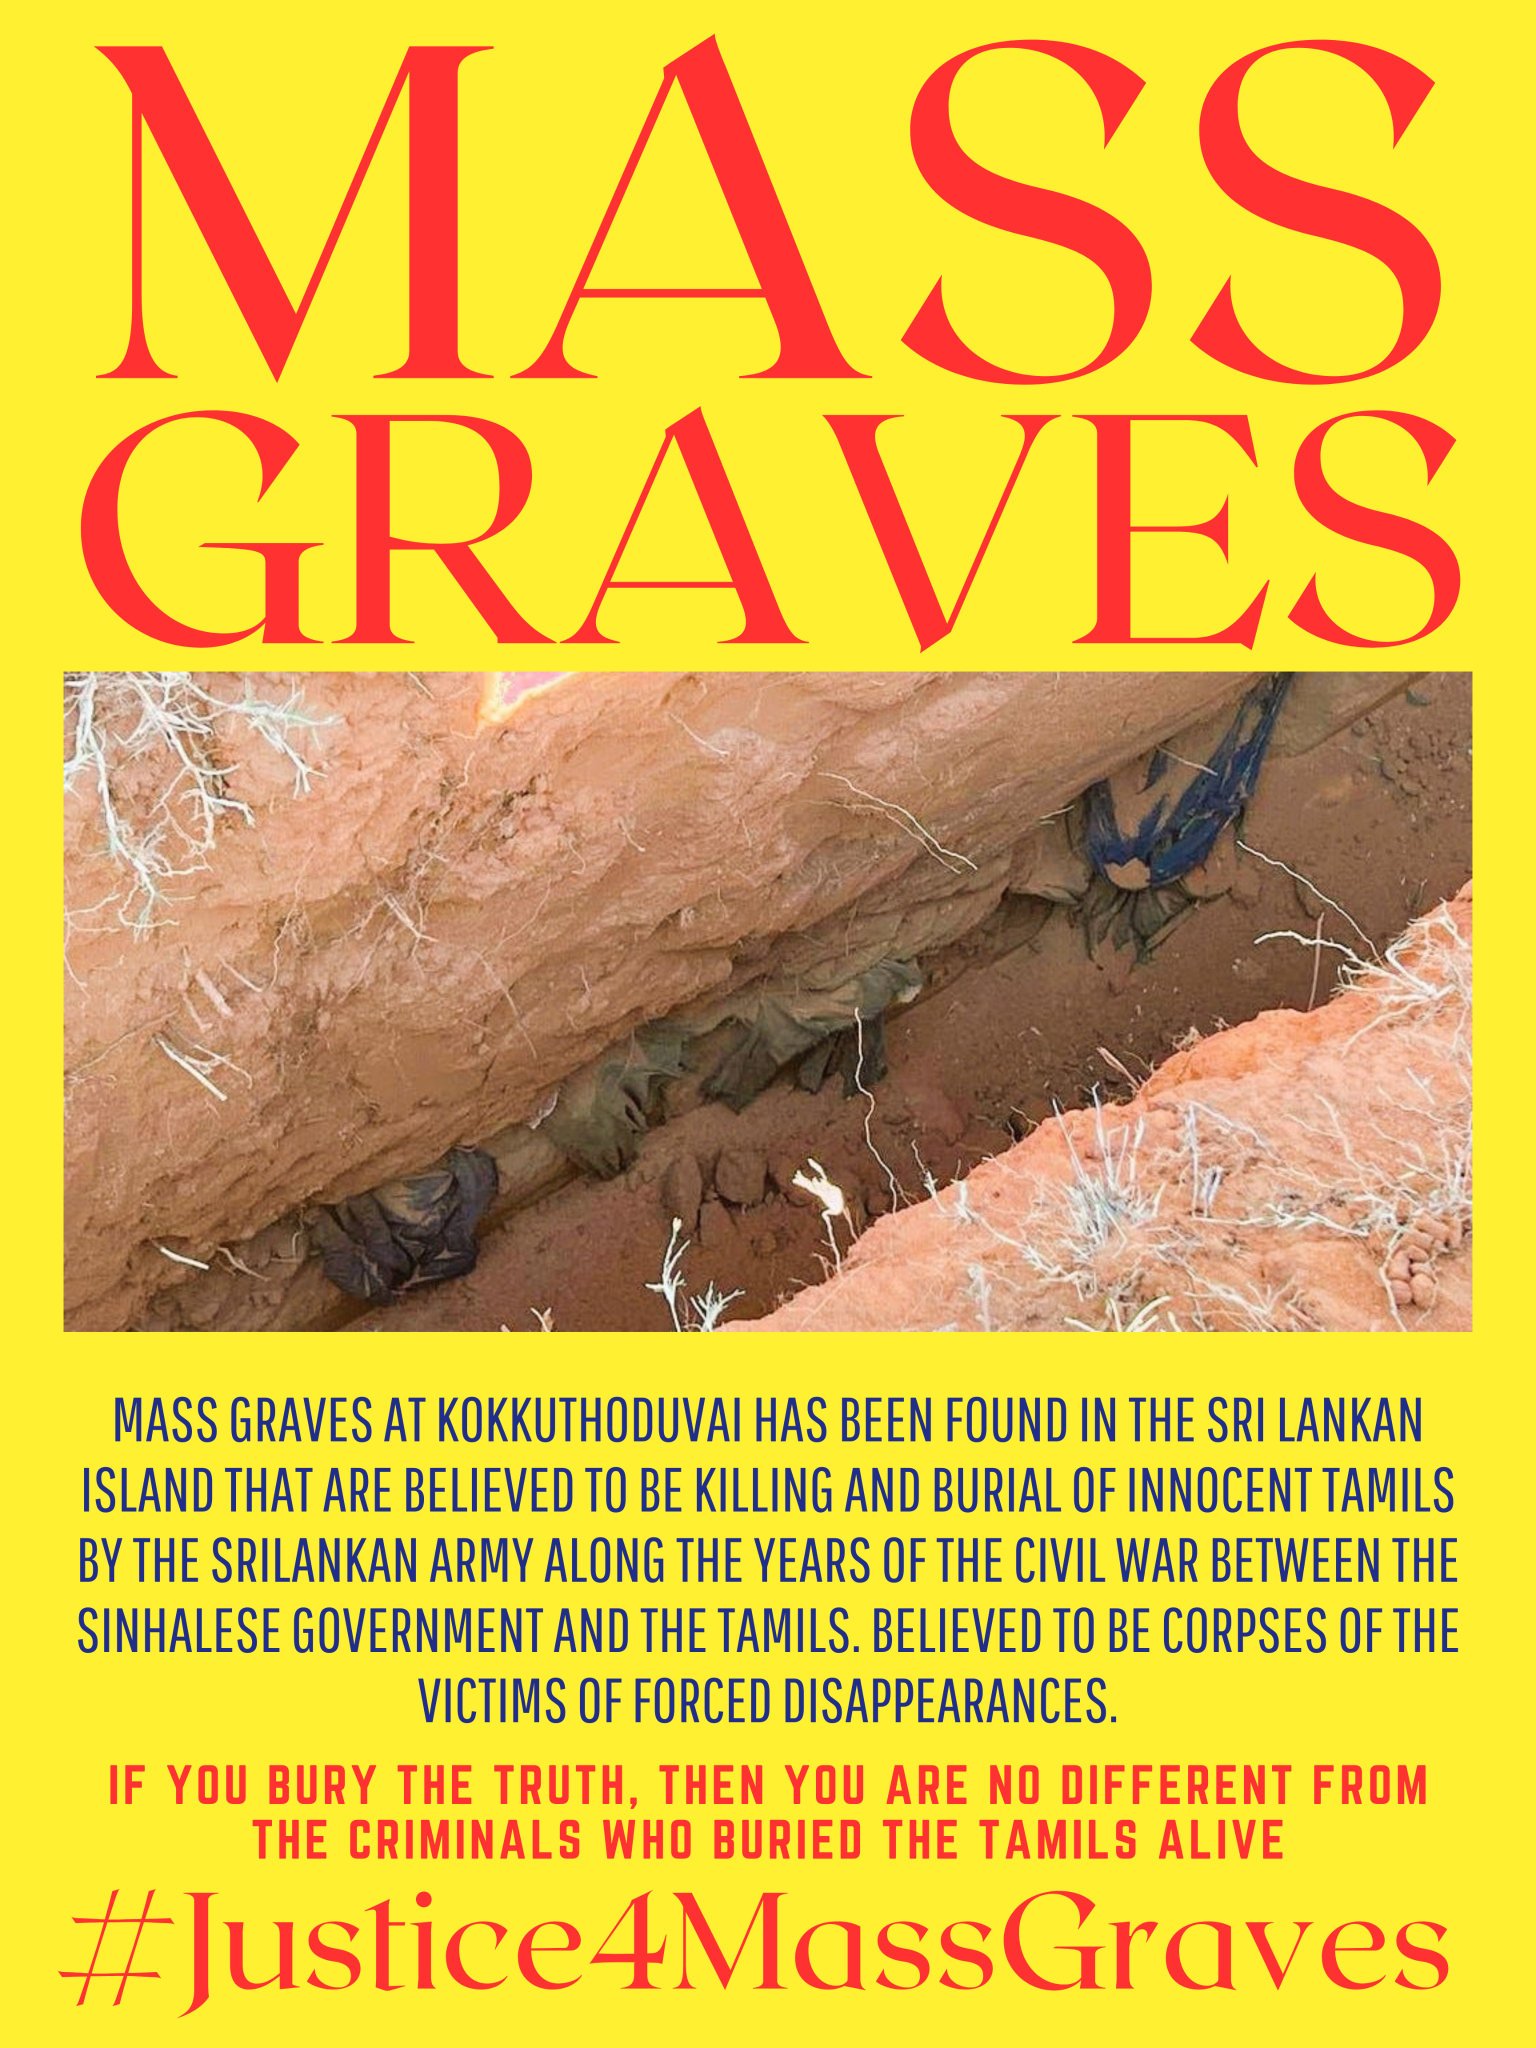 cover art for kokkuthoduvai mass graves Sri lanka